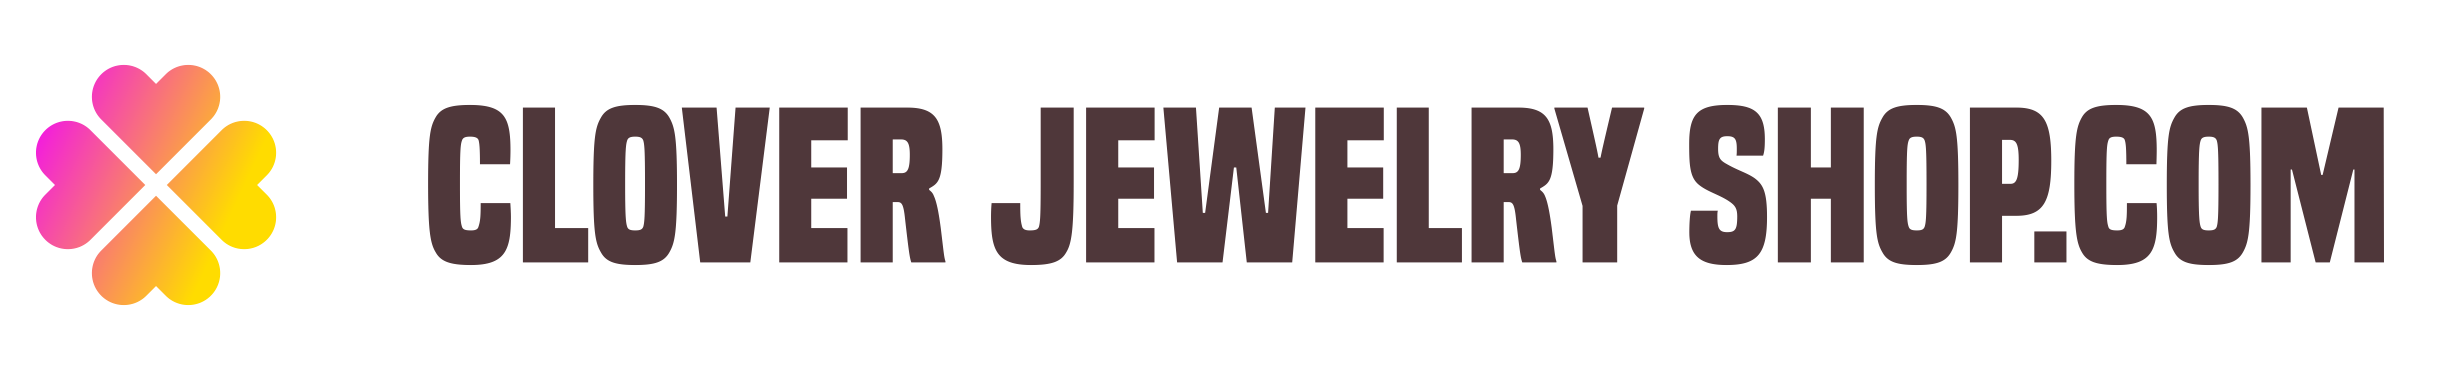 Clover Jewelry Shop Logo